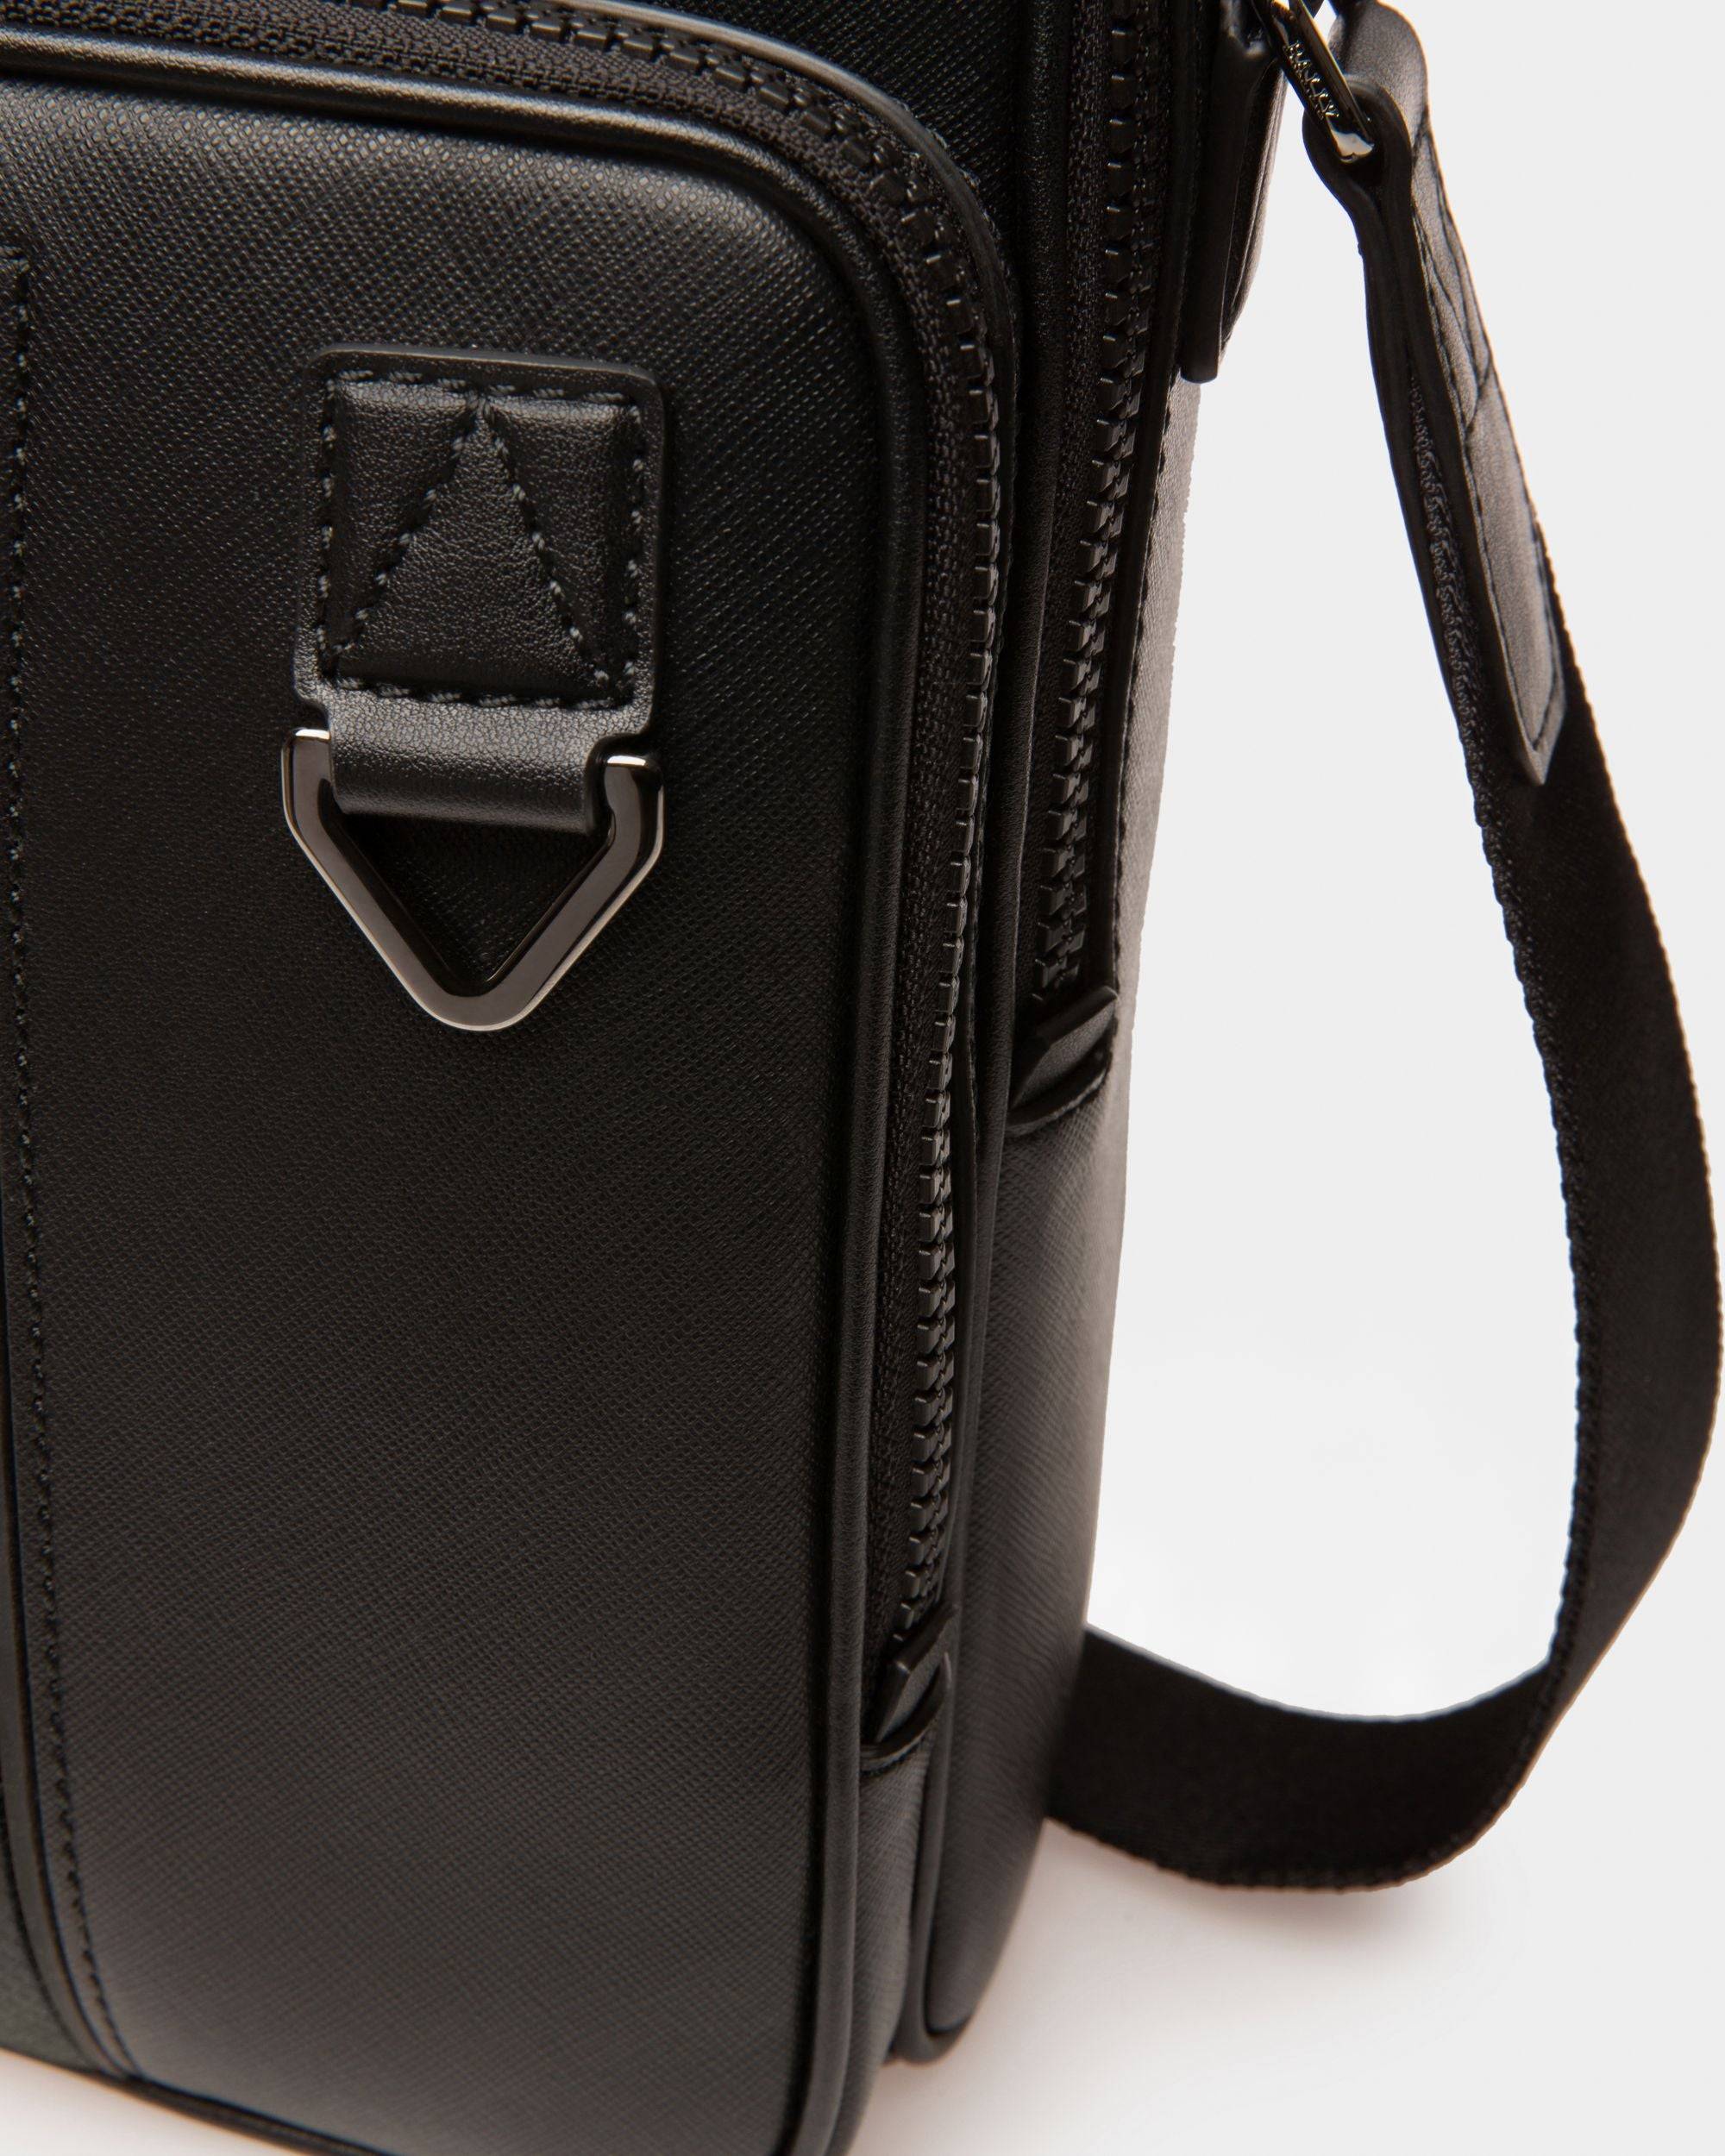 Mackao | Men's Crossbody Bag | Black Leather | Bally | Still Life Detail